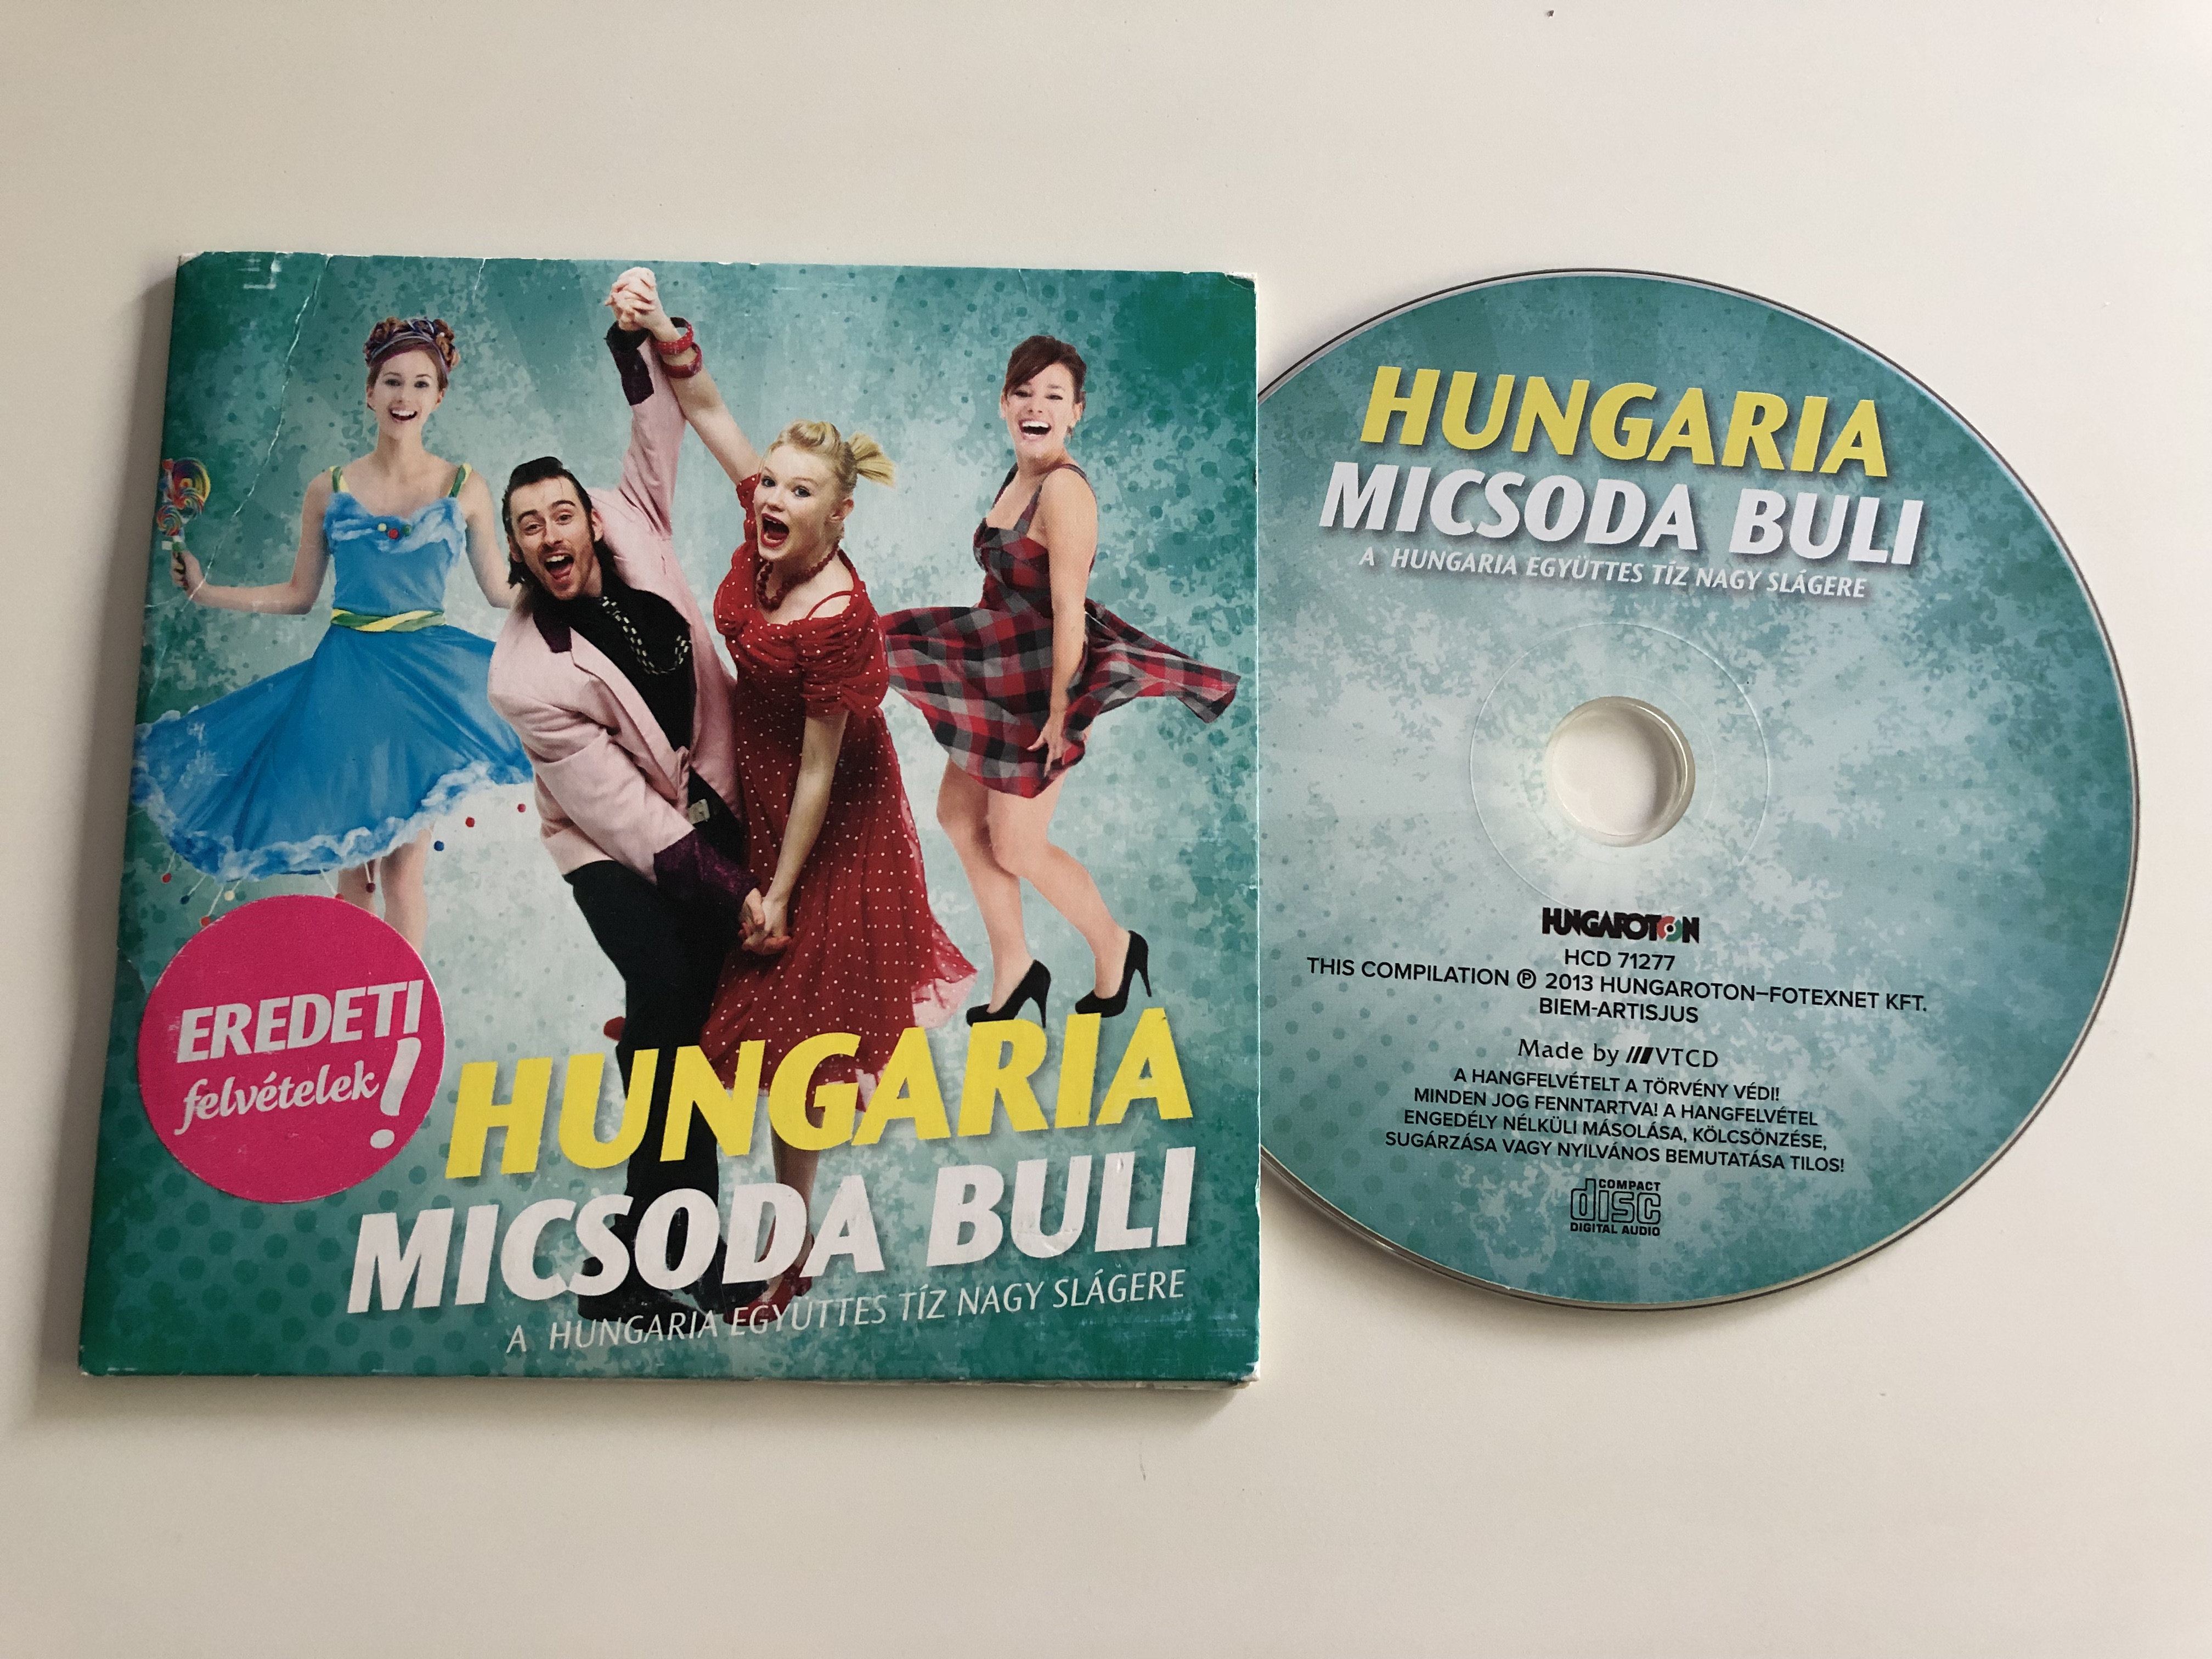 hungaria-micsoda-buli-eredeti-felv-telek-a-hung-ria-egy-ttes-t-z-nagy-sl-gere-audio-cd-2013-hungaroton-hcd-71277-2-.jpg